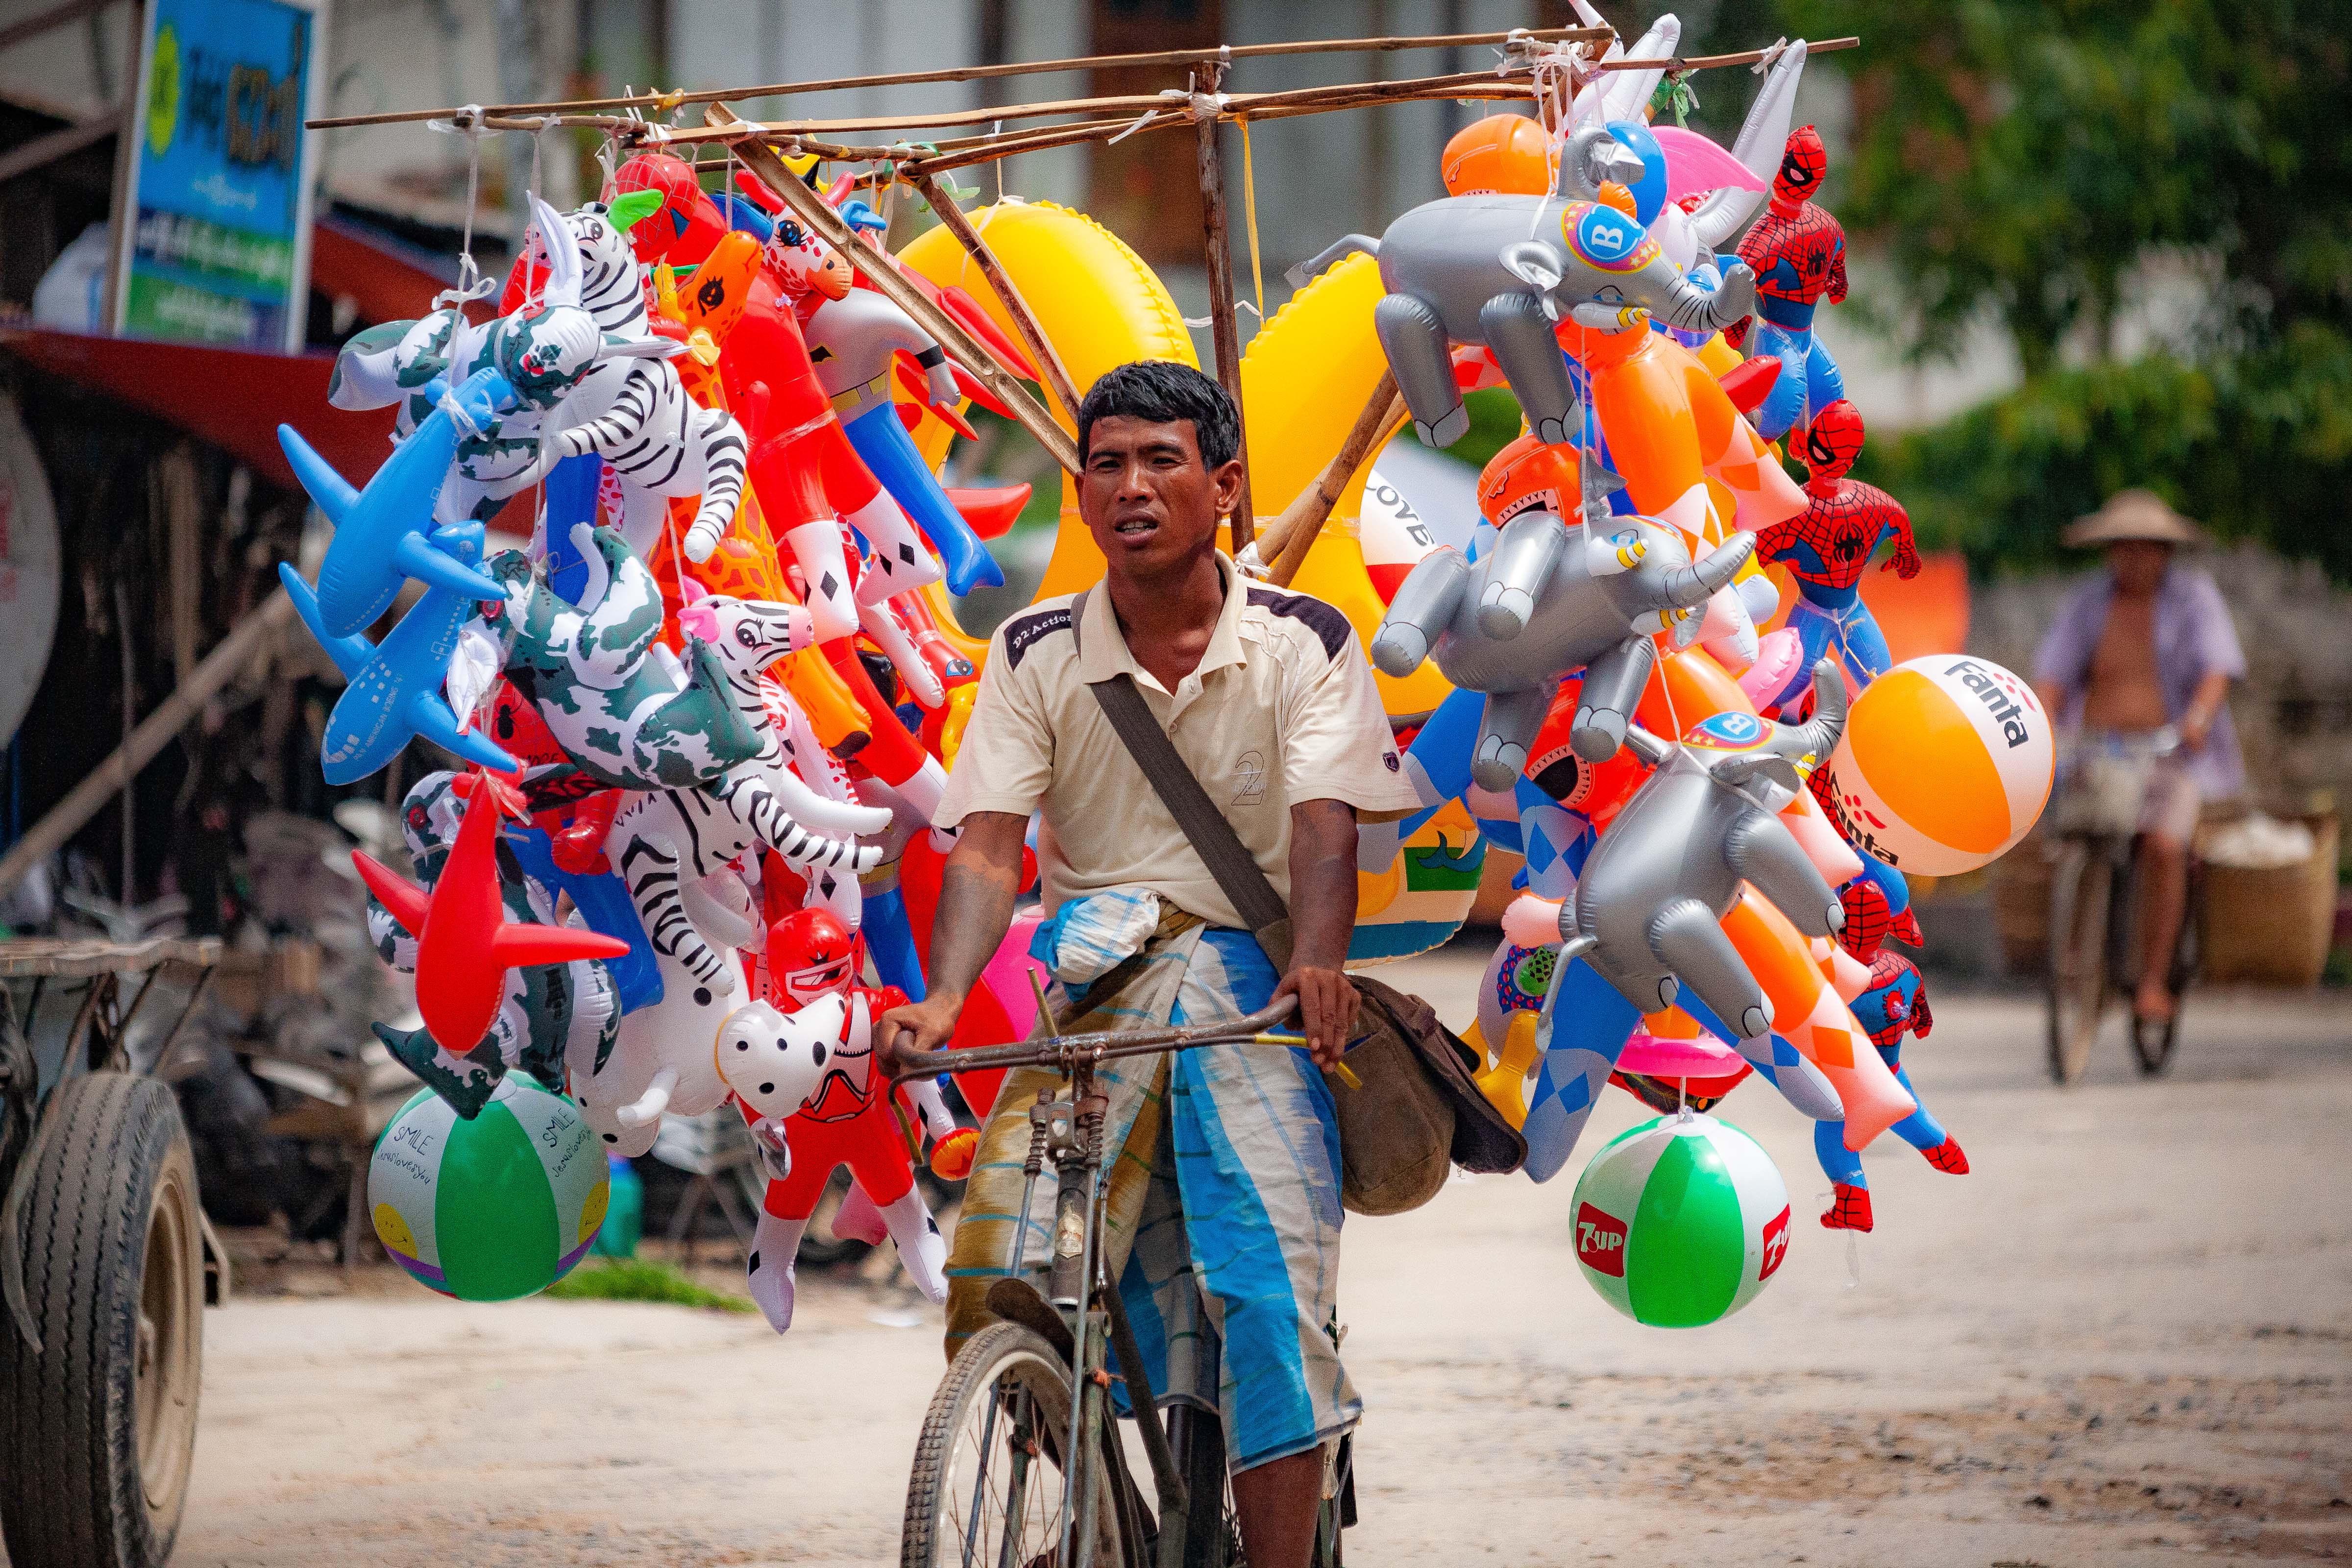 Myanmar, Unknown Prov, Bicycle Vendor Scene, 2009, IMG 3291